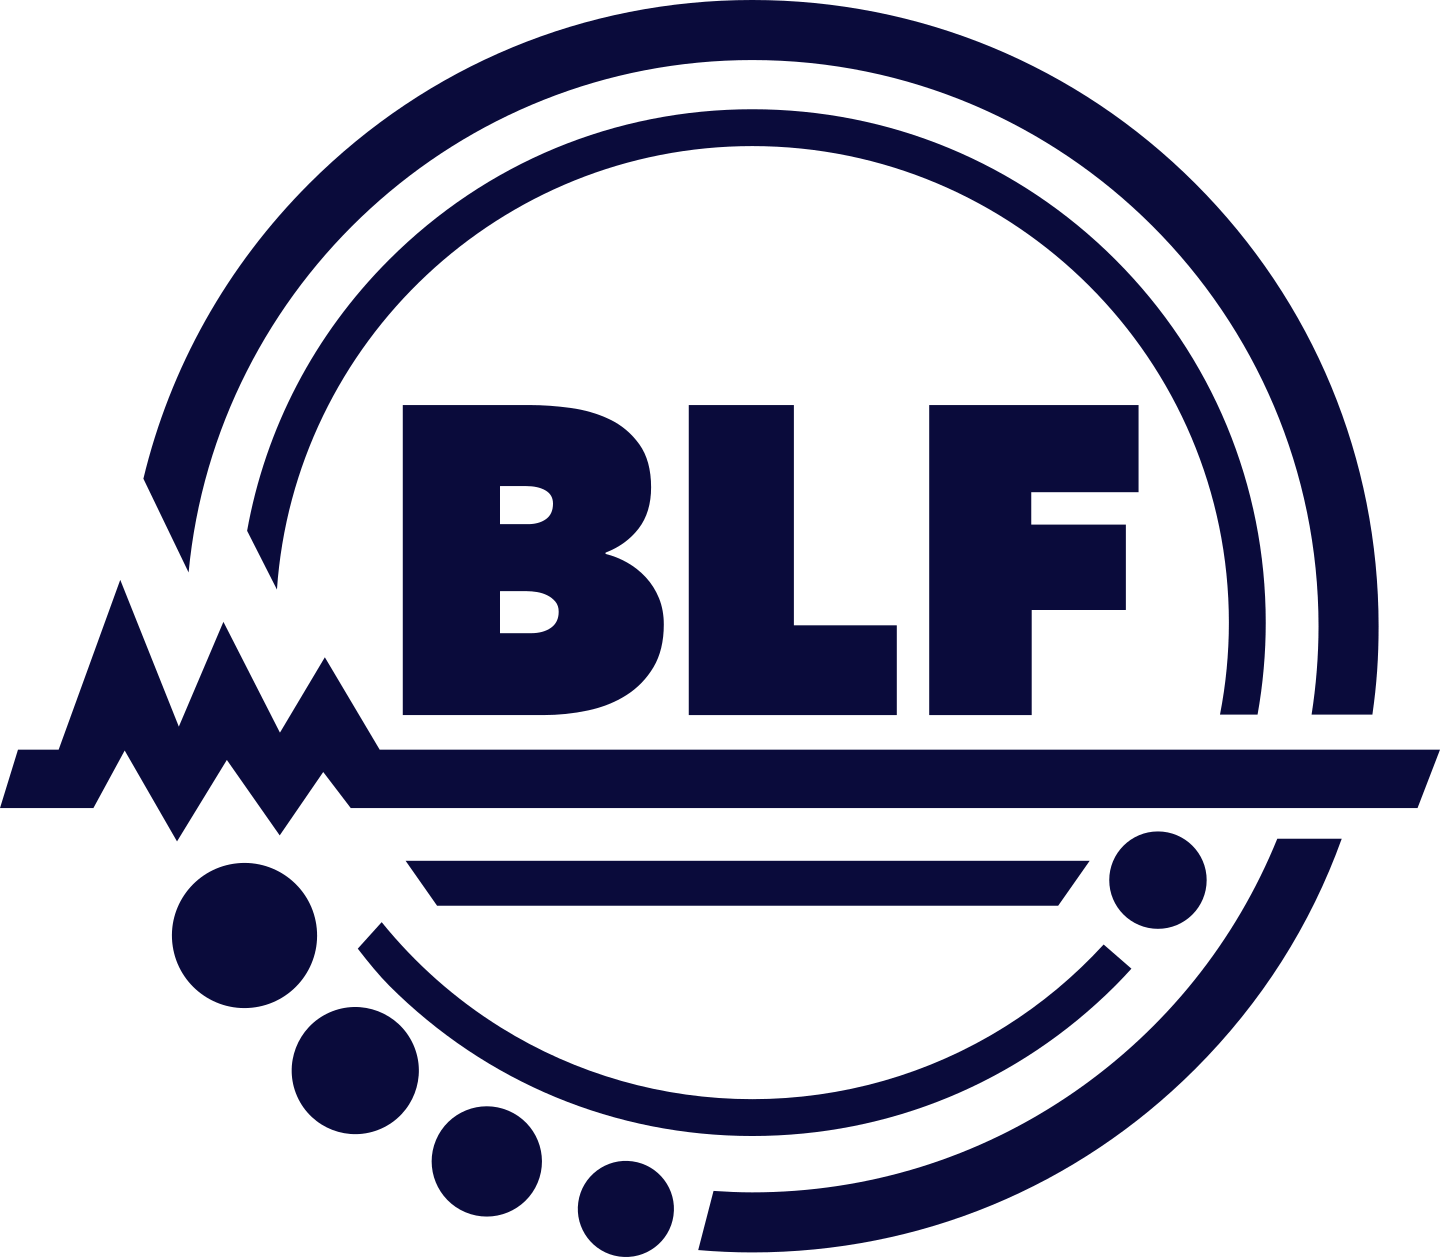 Beroset Law Firm lettermark dark logo